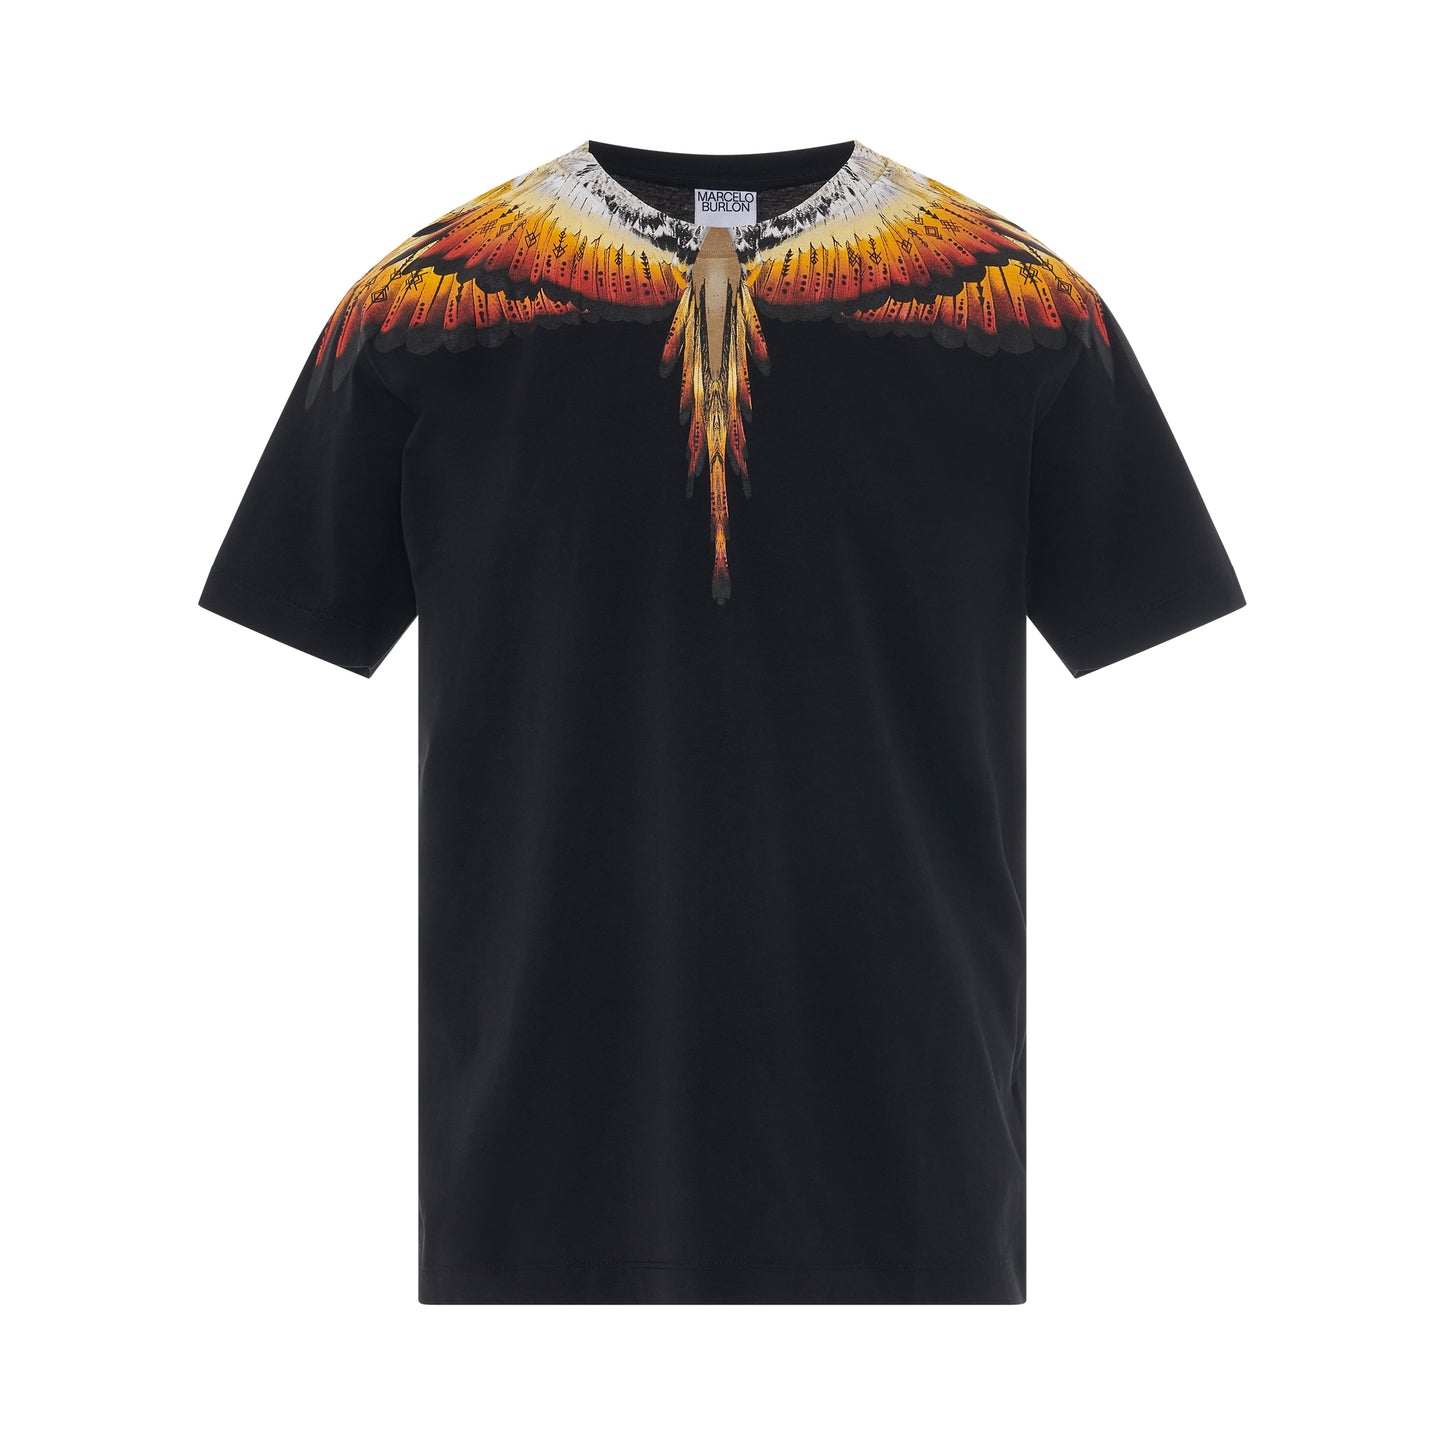 Solfolk Wings Regular T-Shirt in Black/Red